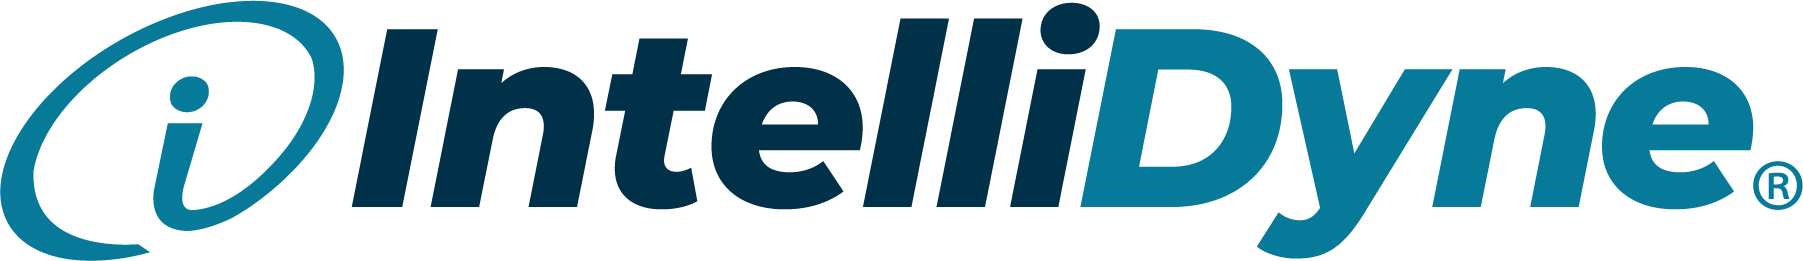 IntelliDyne logo